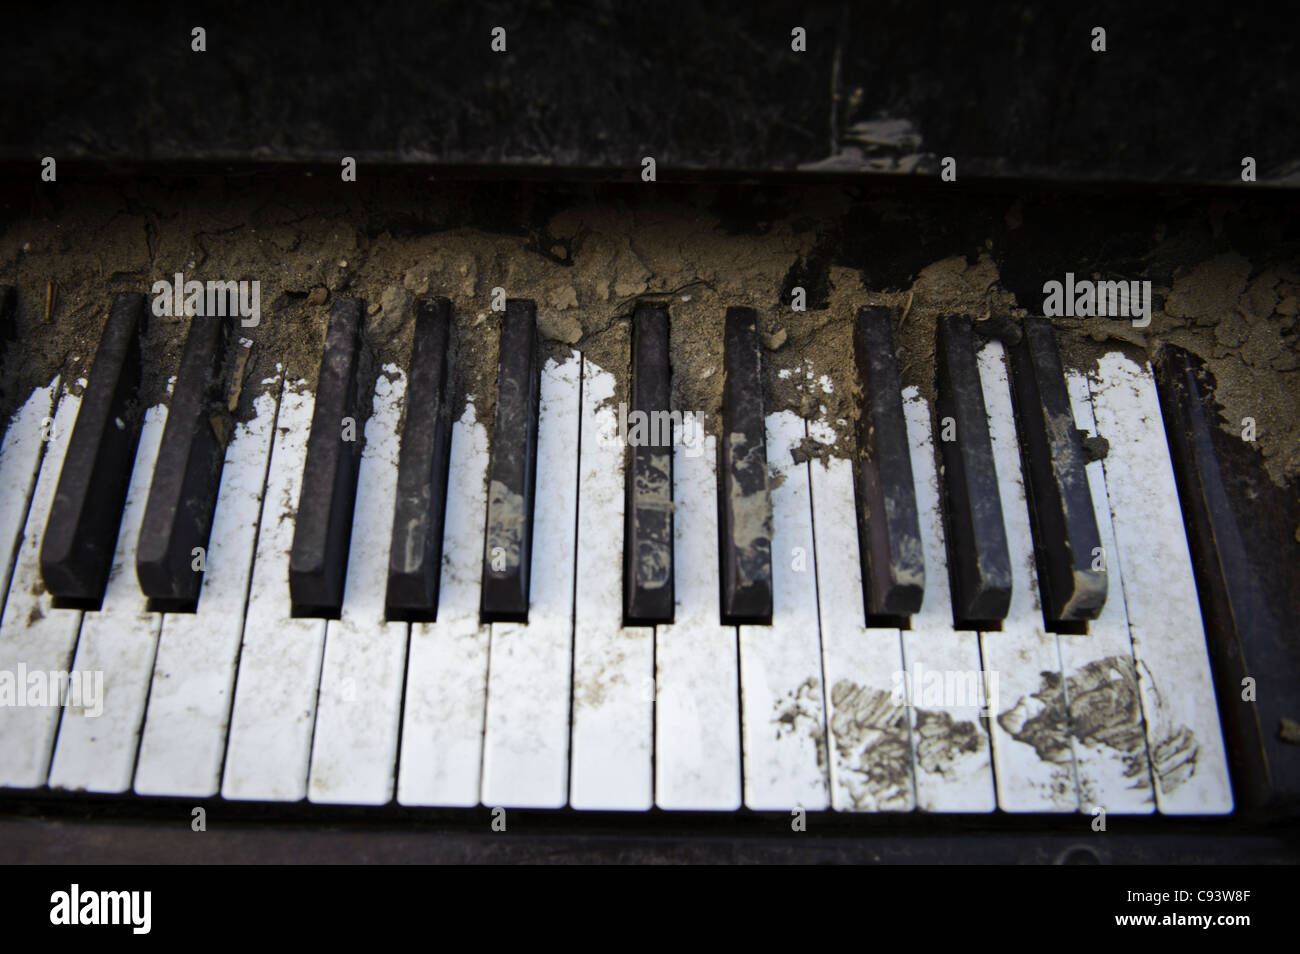 A piano amidst debris from the March 11 tsunami, Ishinomaki, Miyagi Prefecture, Japan Stock Photo